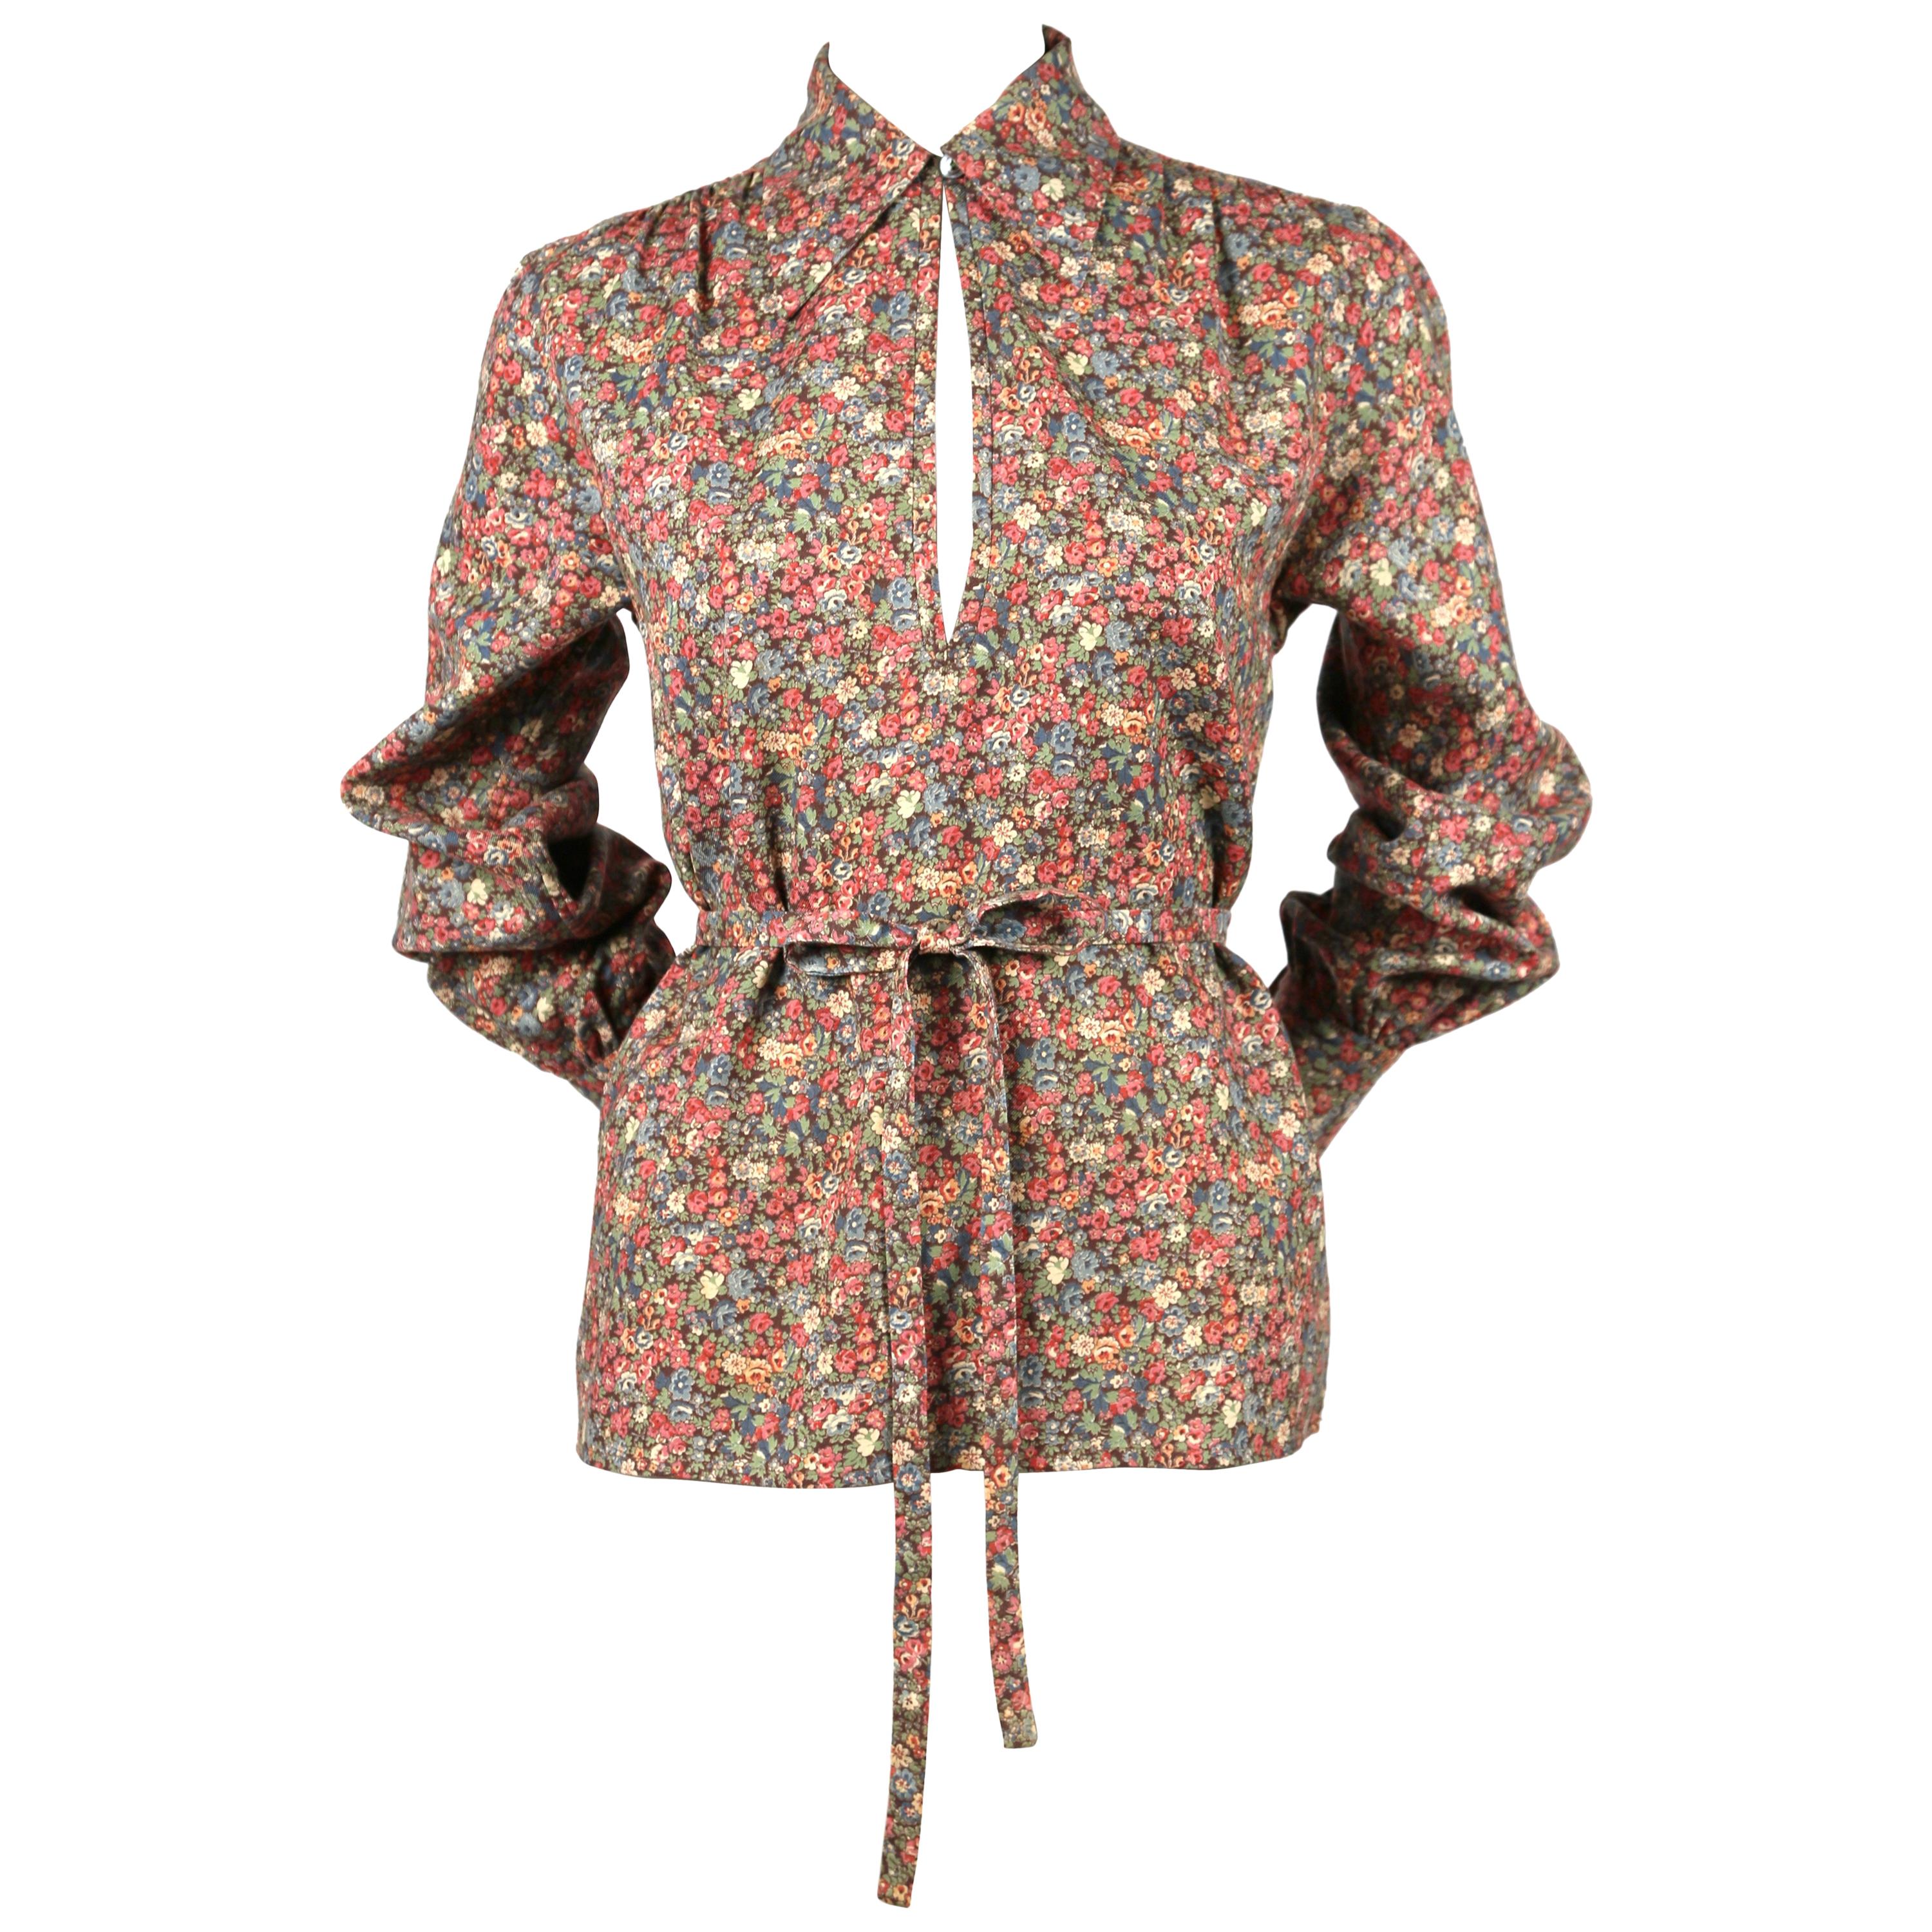 1970's YVES SAINT LAURENT floral peasant blouse with tie